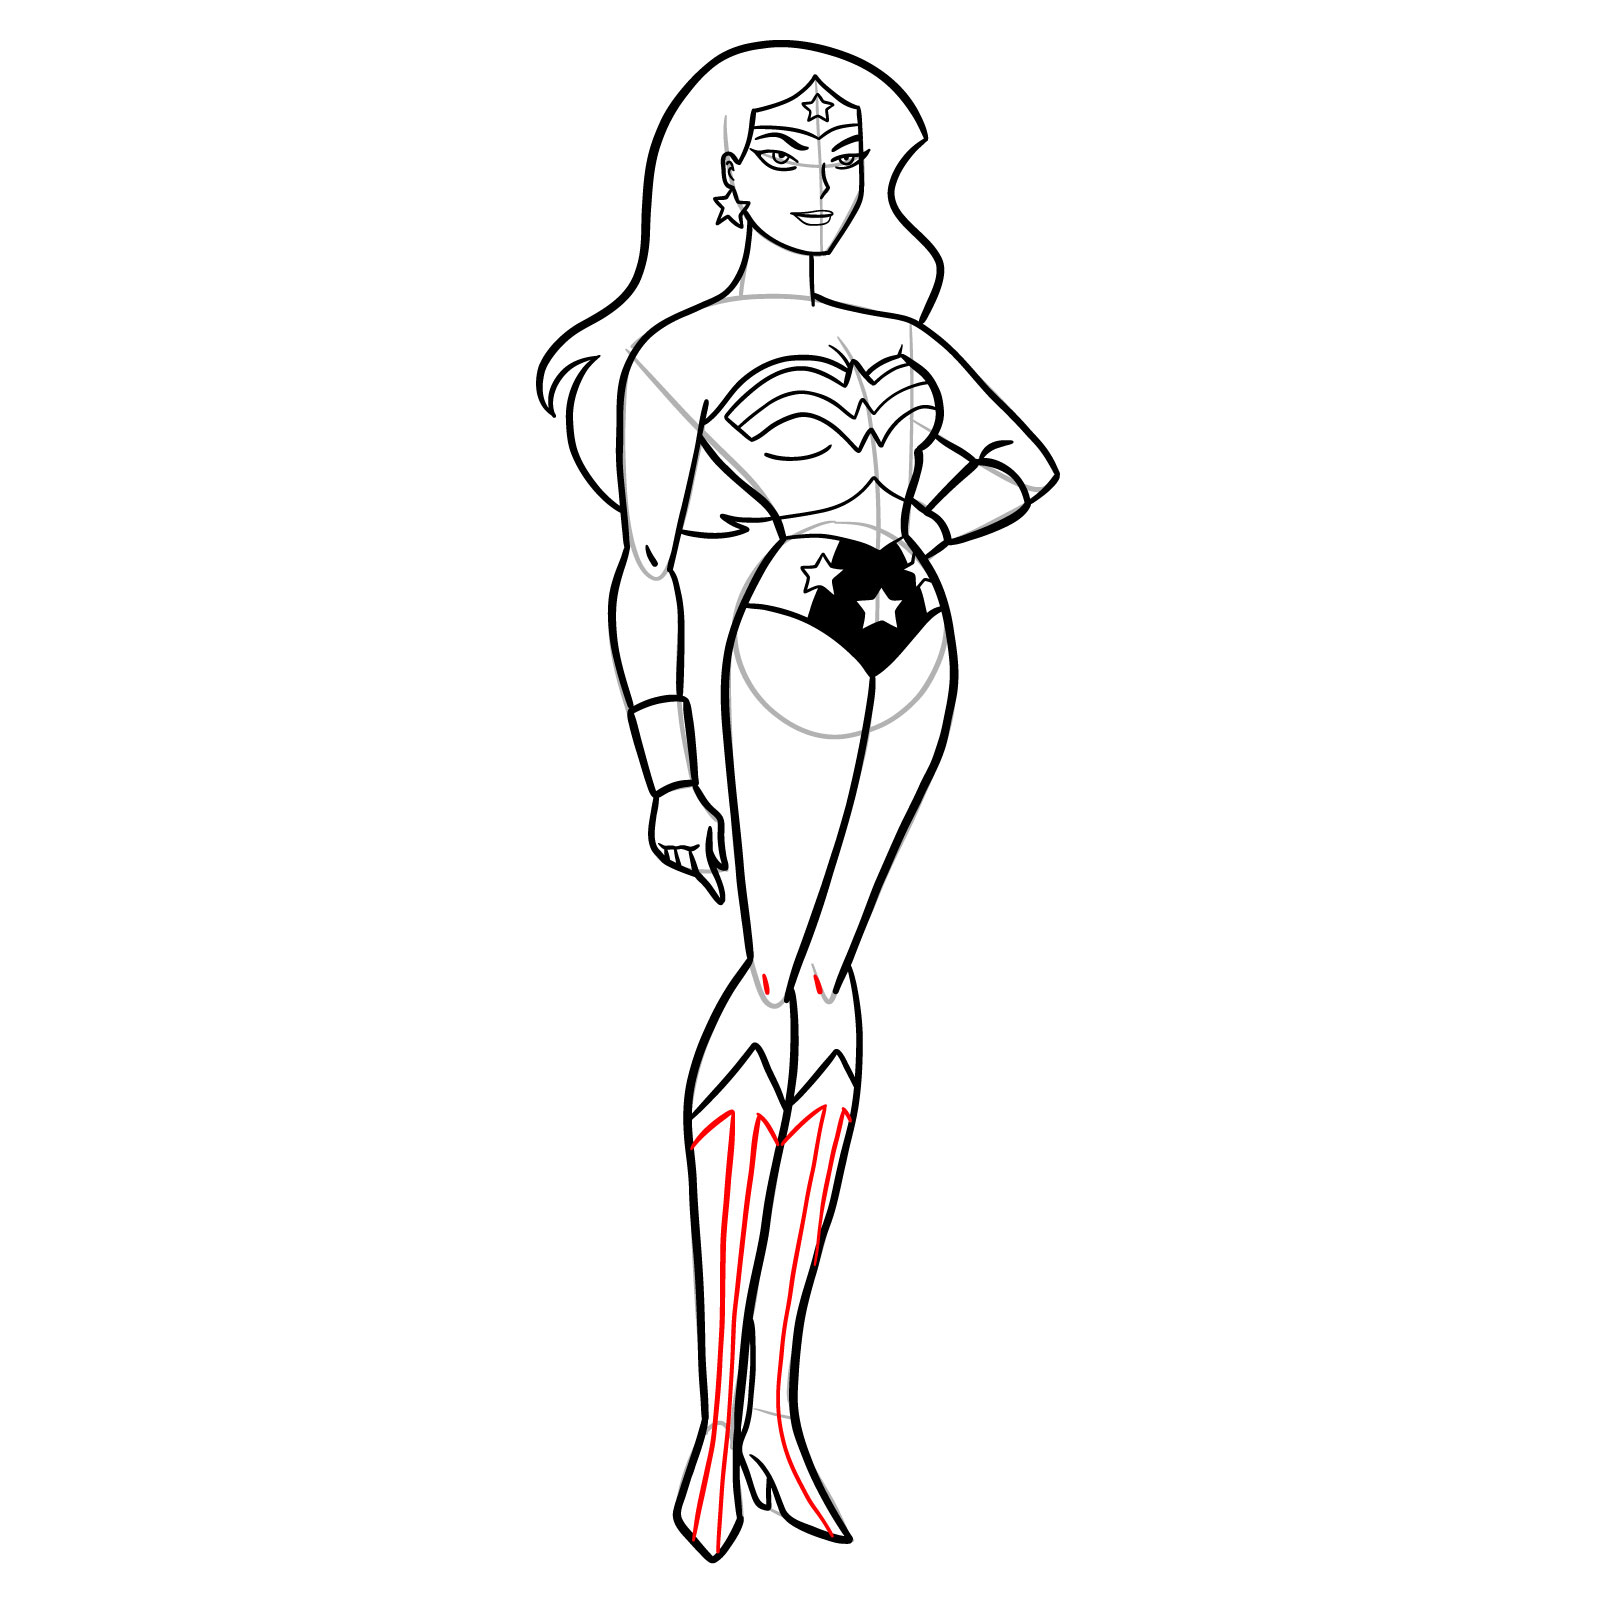 How to draw Wonder Woman cartoon style - step 31